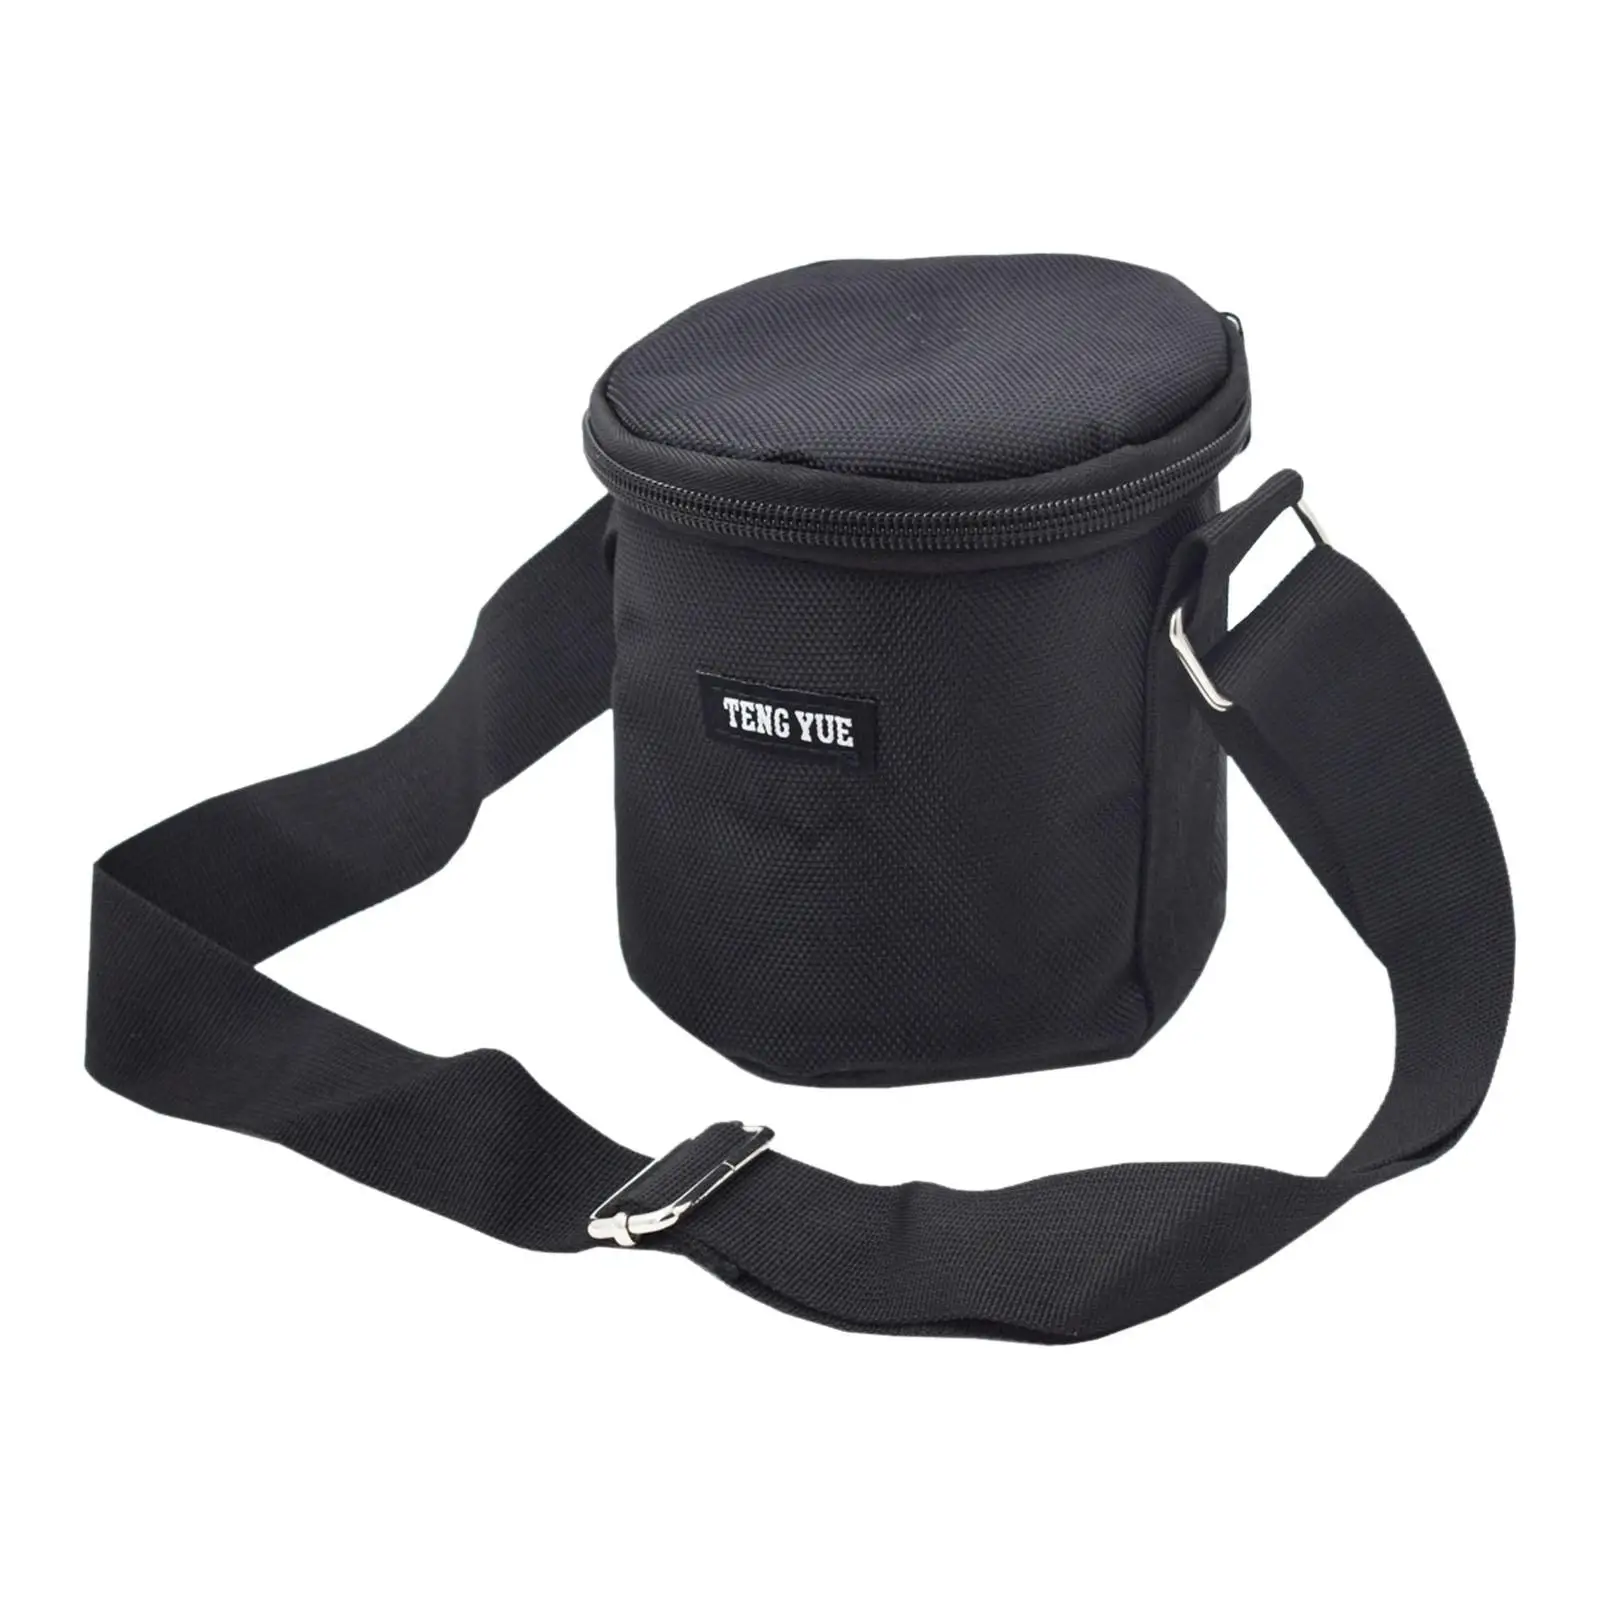 Dumbbell Plates Bag, Adjustable Shoulder Strap Barbell Plates Carrying Bag, Heavy Duty Weight Plates Storage Bag, Black